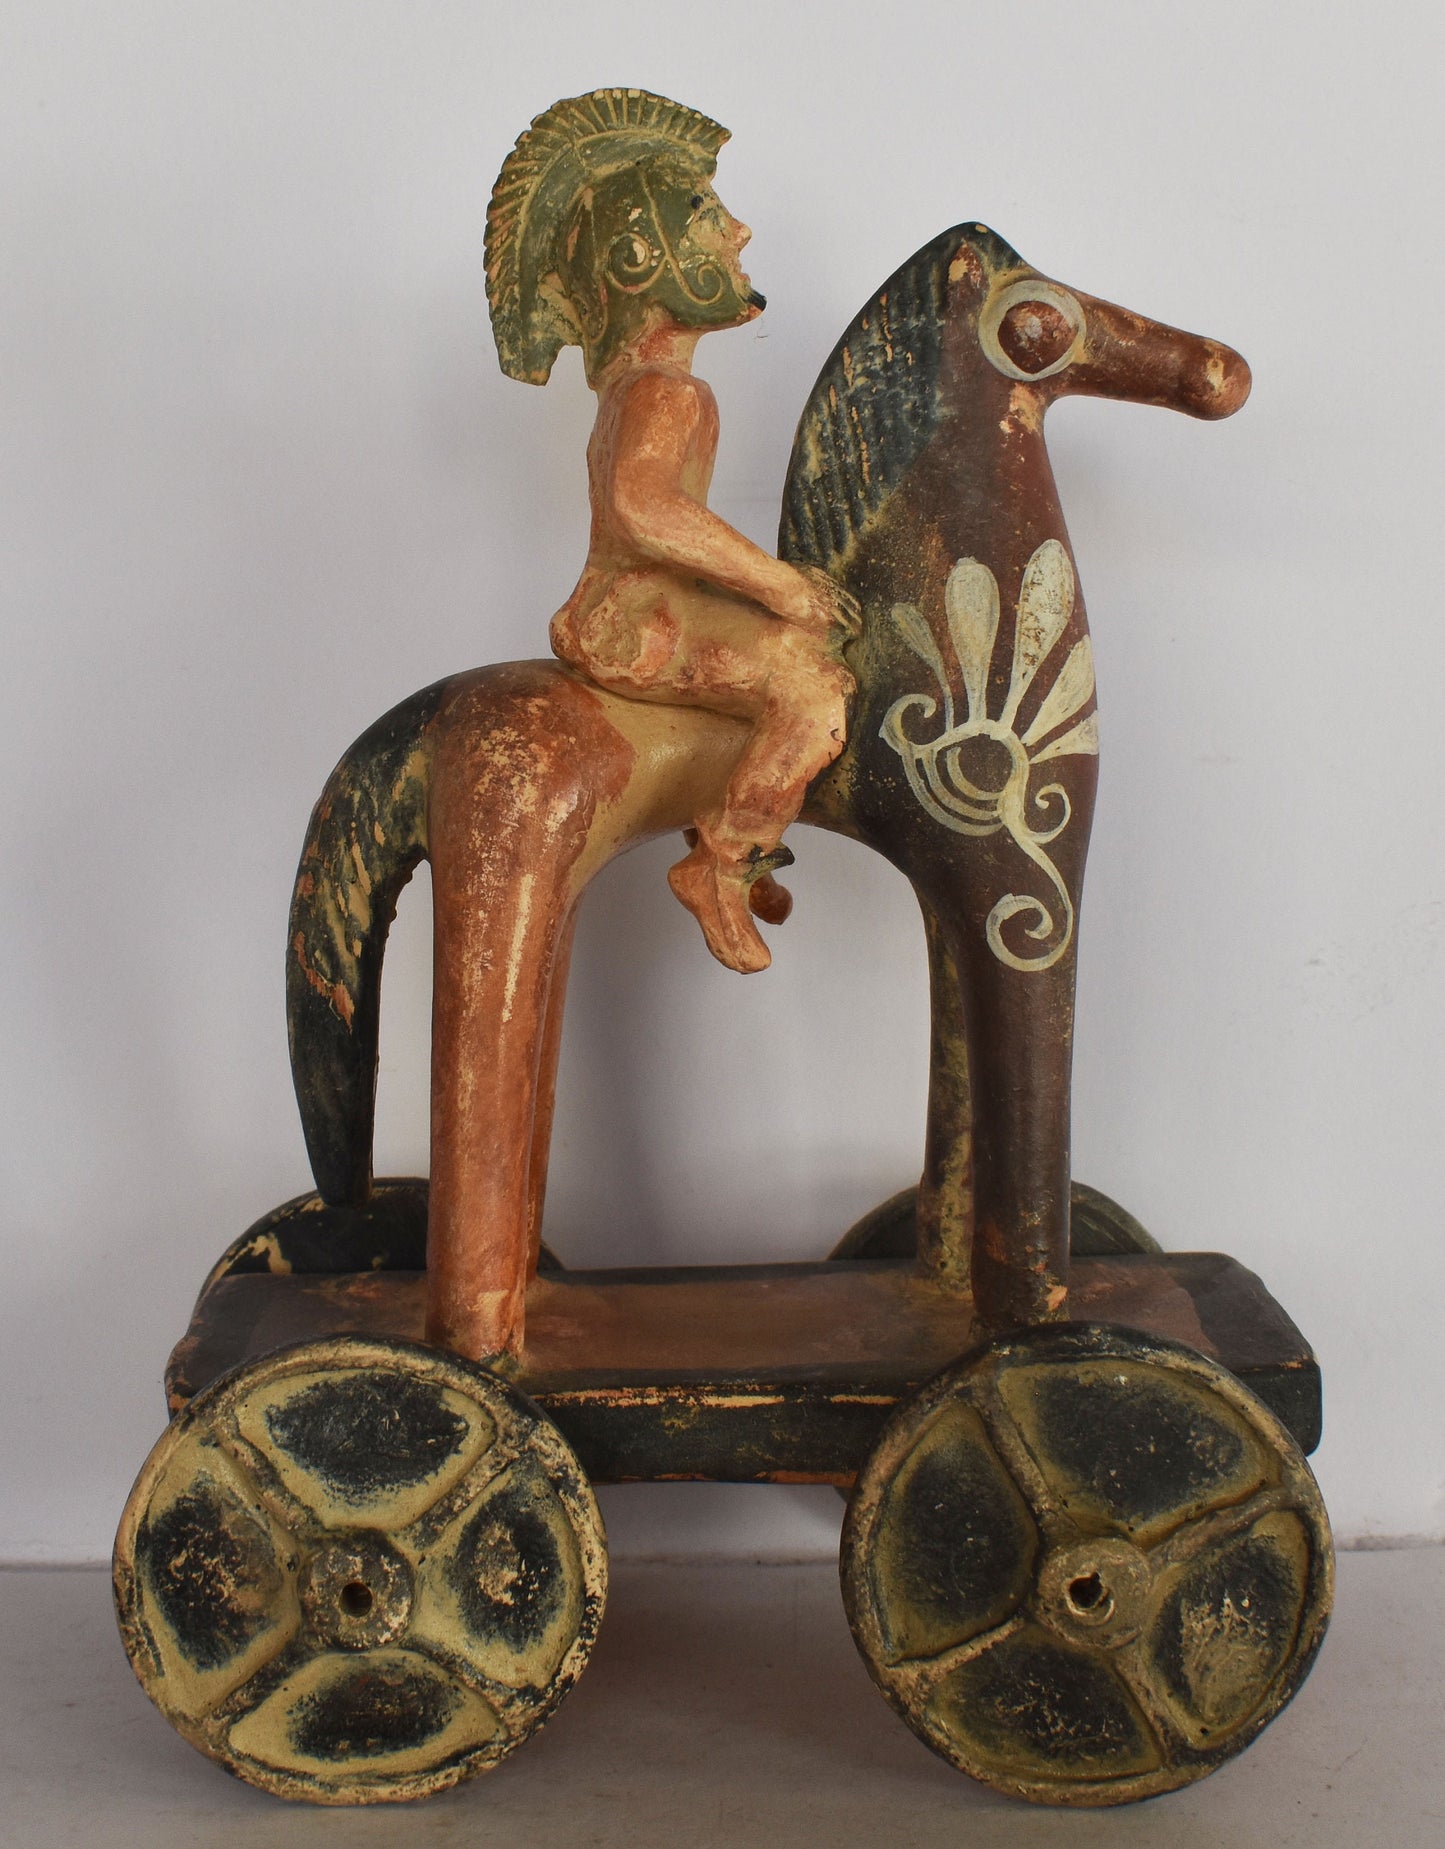 Horse Rider - Wheels Toy - Athens, Attica - 500 BC - Miniature - Museum Reproduction  - Ceramic Artifact